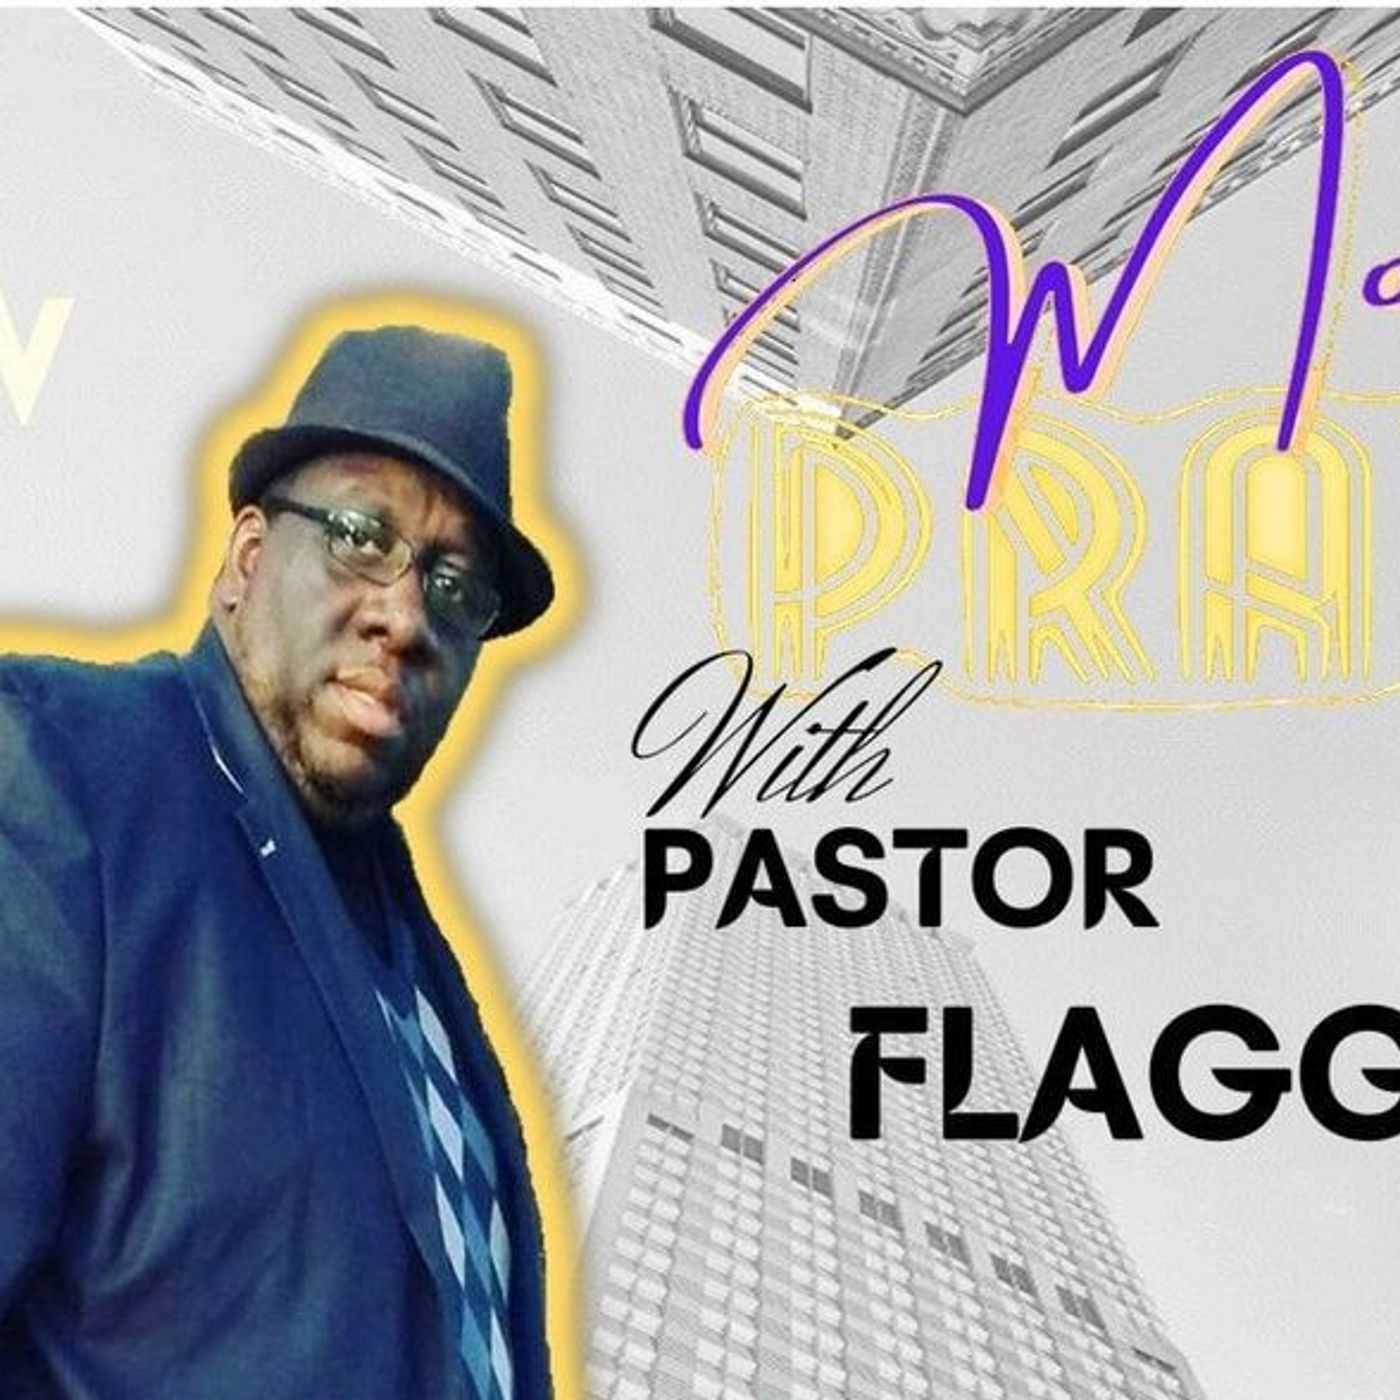 Morning PrayZe with Pastor Flagg 08/14/21